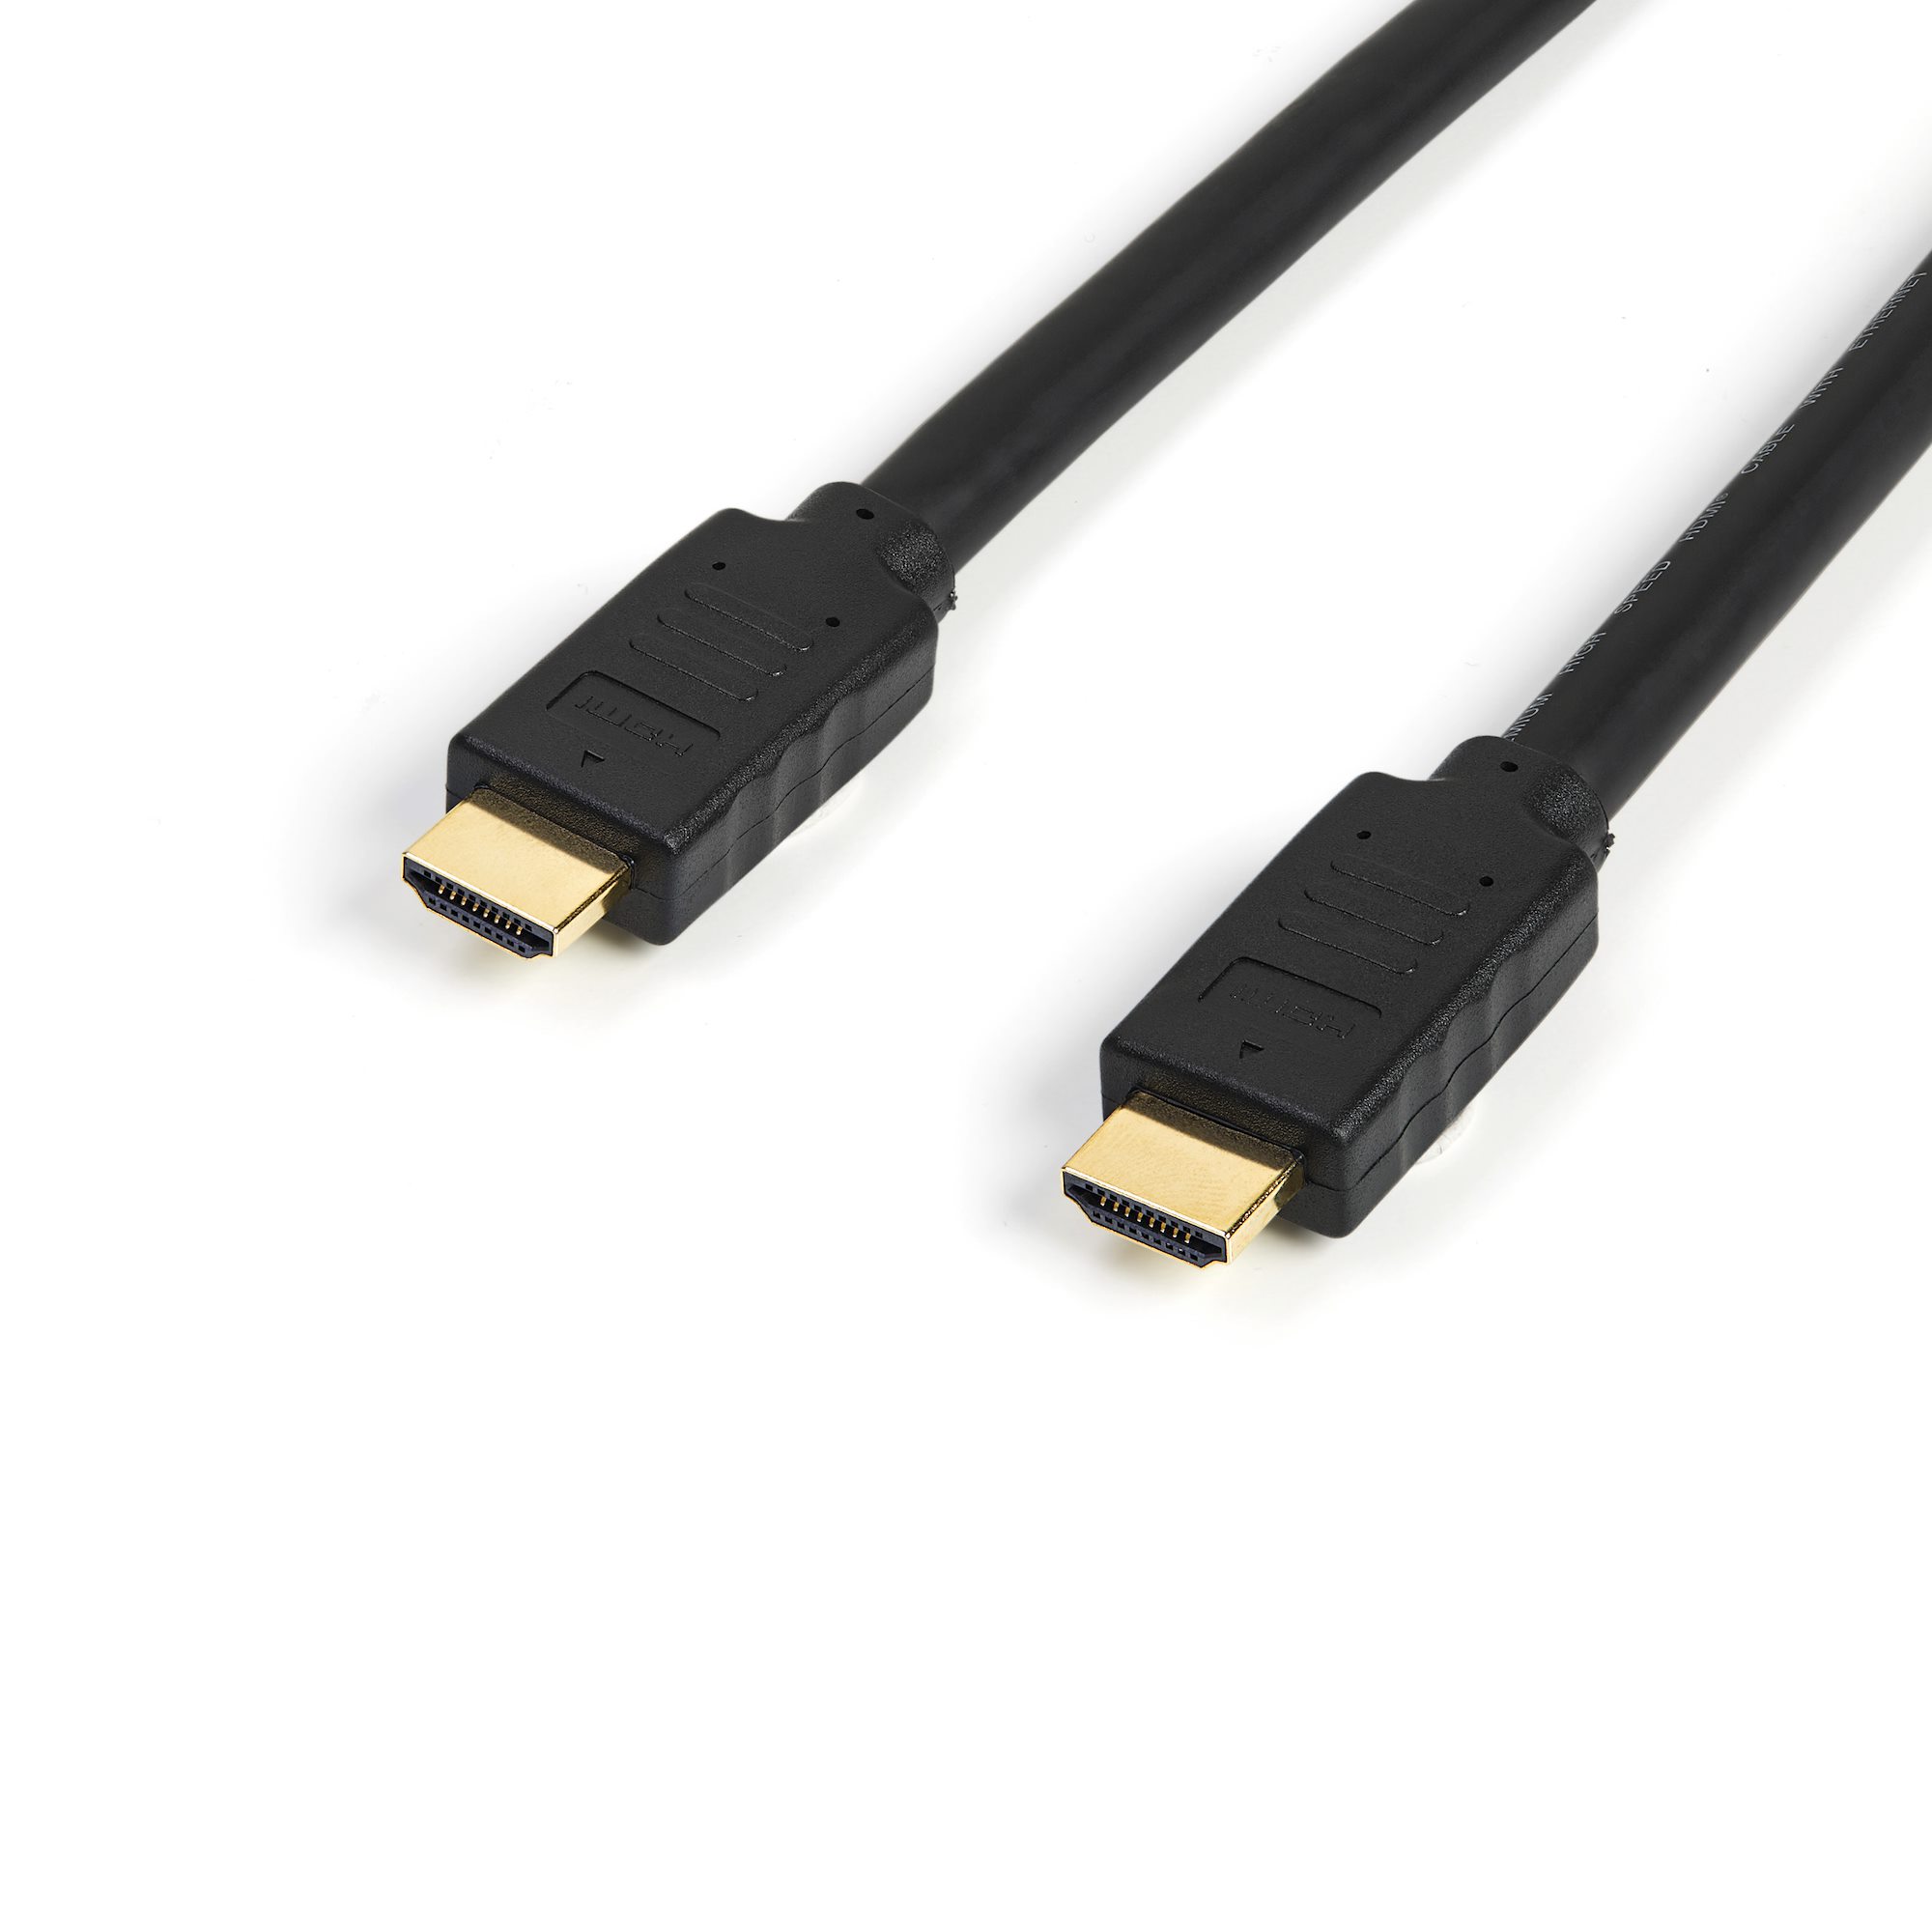 Intakt Ælte Tilfredsstille 15ft 5m Premium HDMI 2.0 Cable 4K 60Hz - HDMI® Cables & HDMI Adapters |  StarTech.com